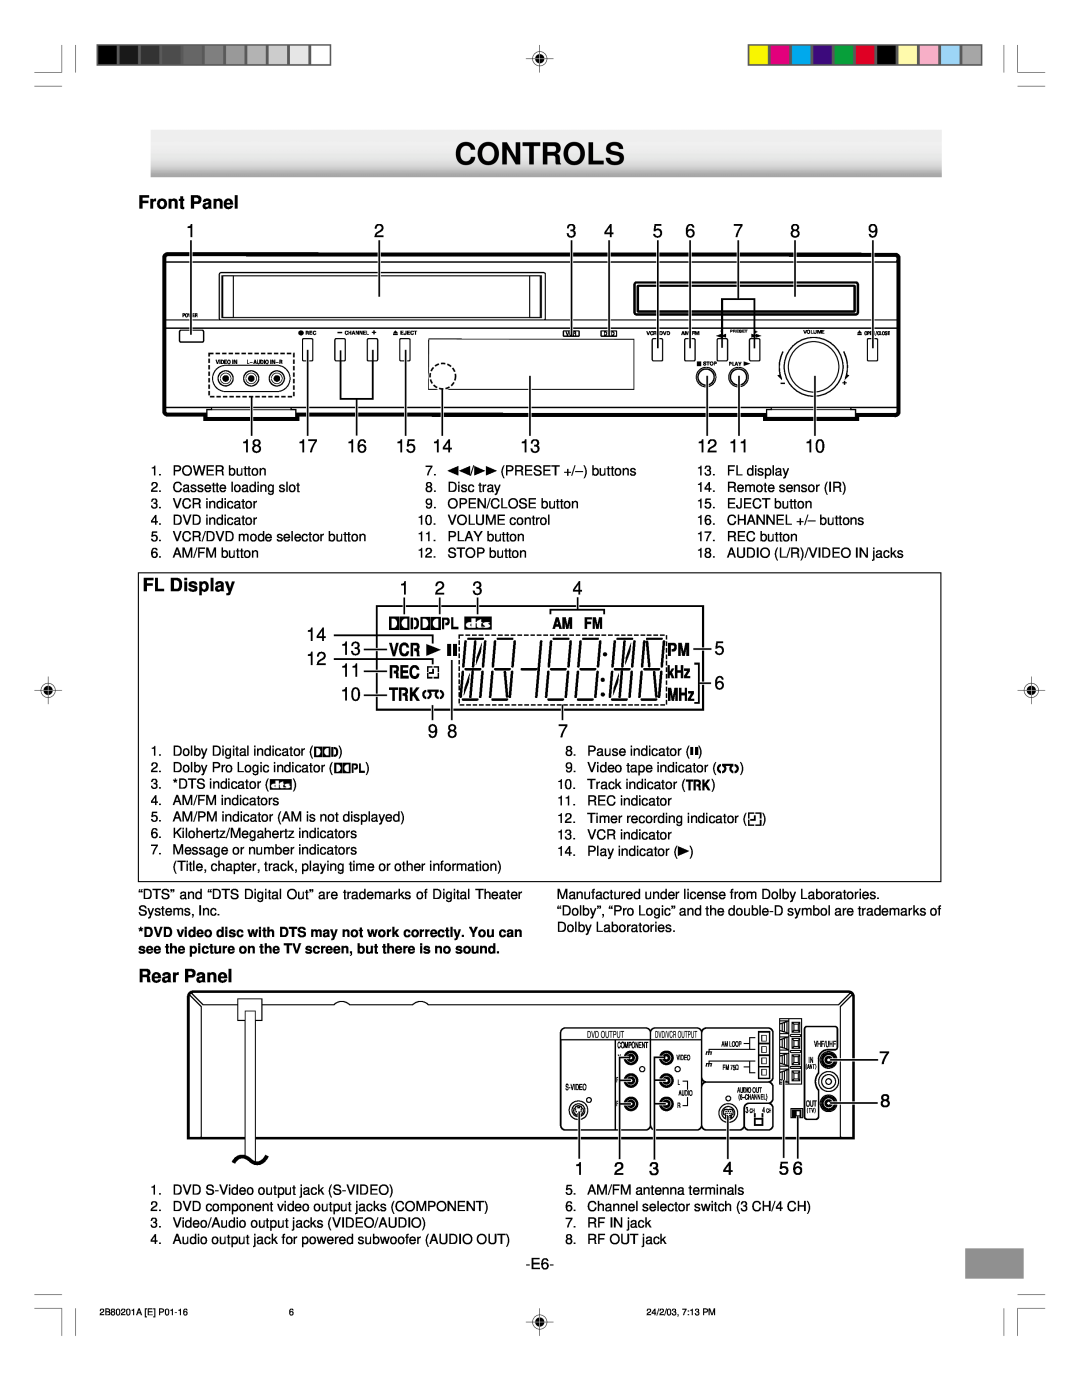 Sanyo DWM-3500 instruction manual Controls, Front Panel, FL Display, Rear Panel 